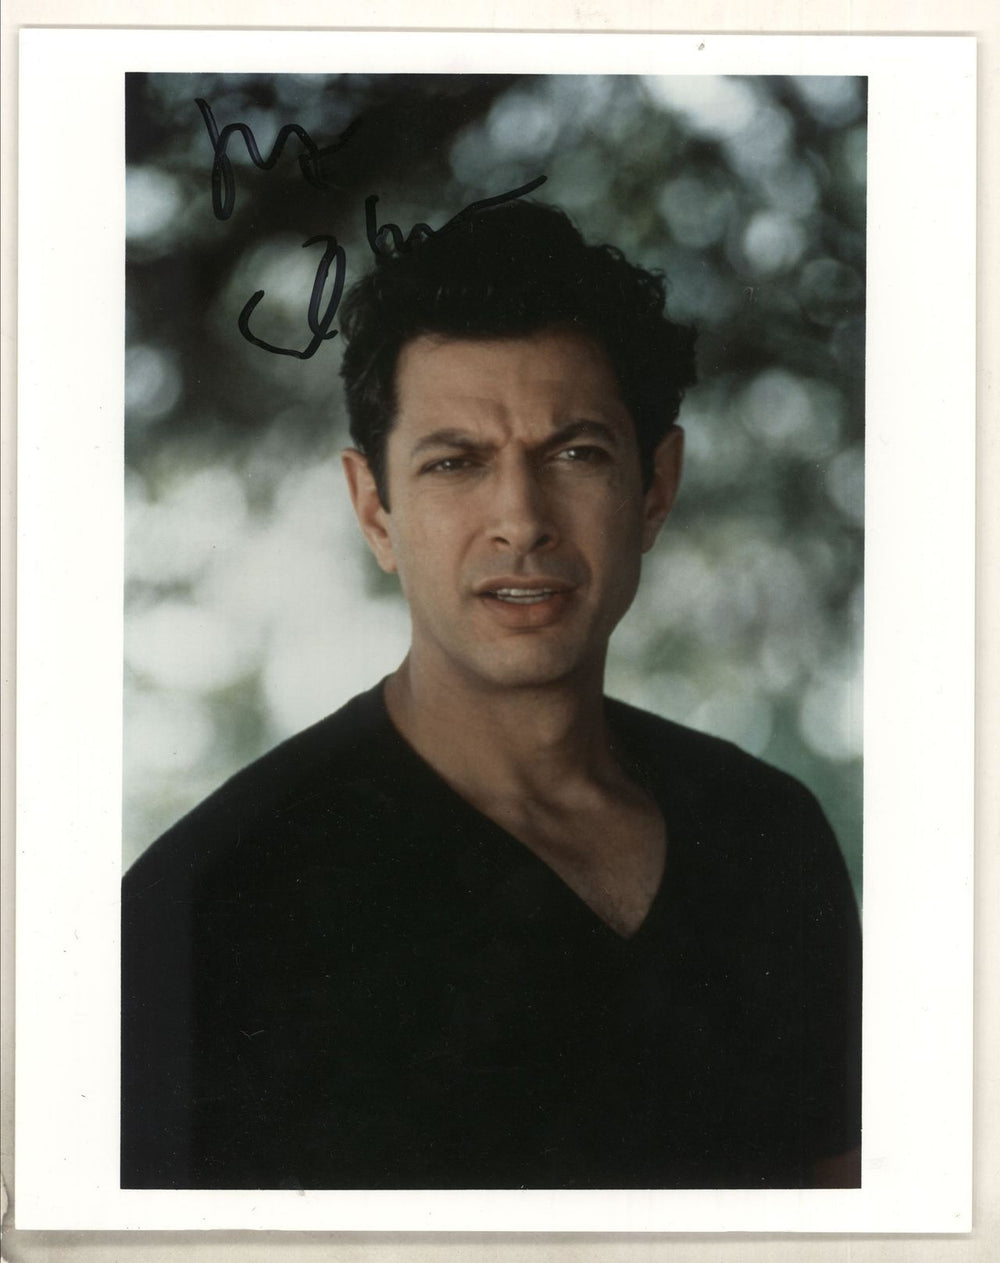 Jeff Goldblum Autographed Photograph UK photograph SIGNED PHOTOGRAPH